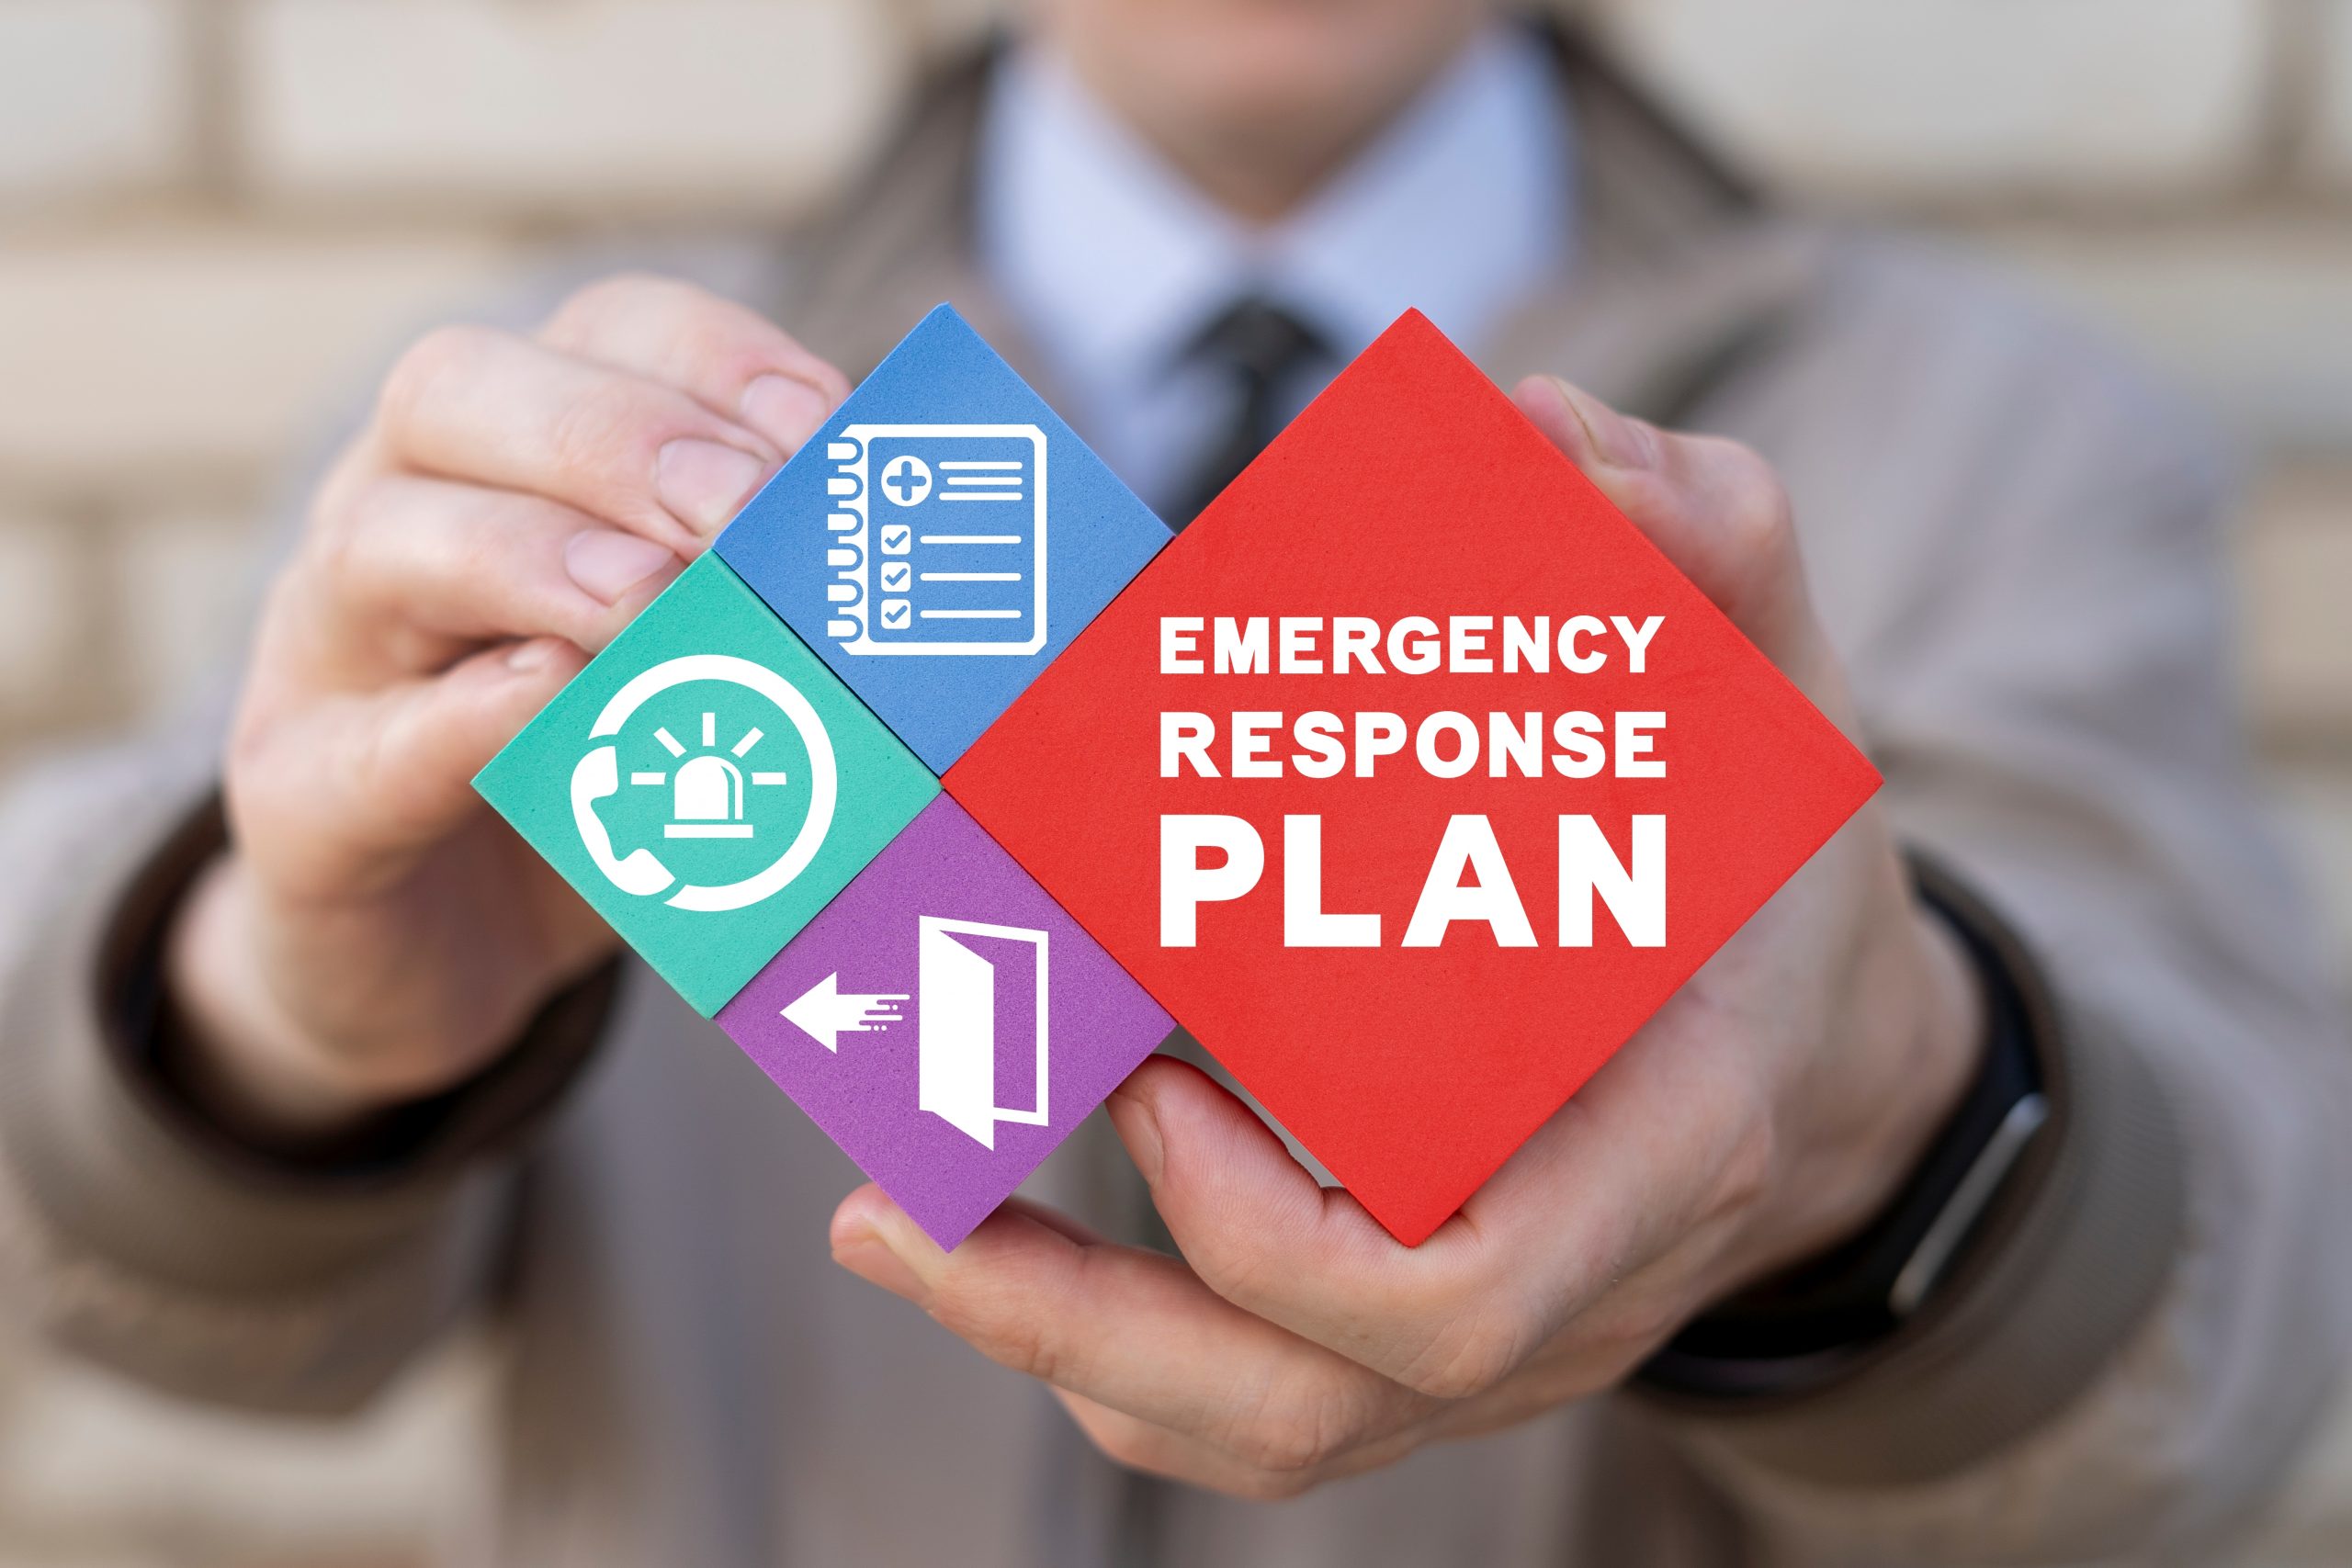 Emergency Response Plan - concept